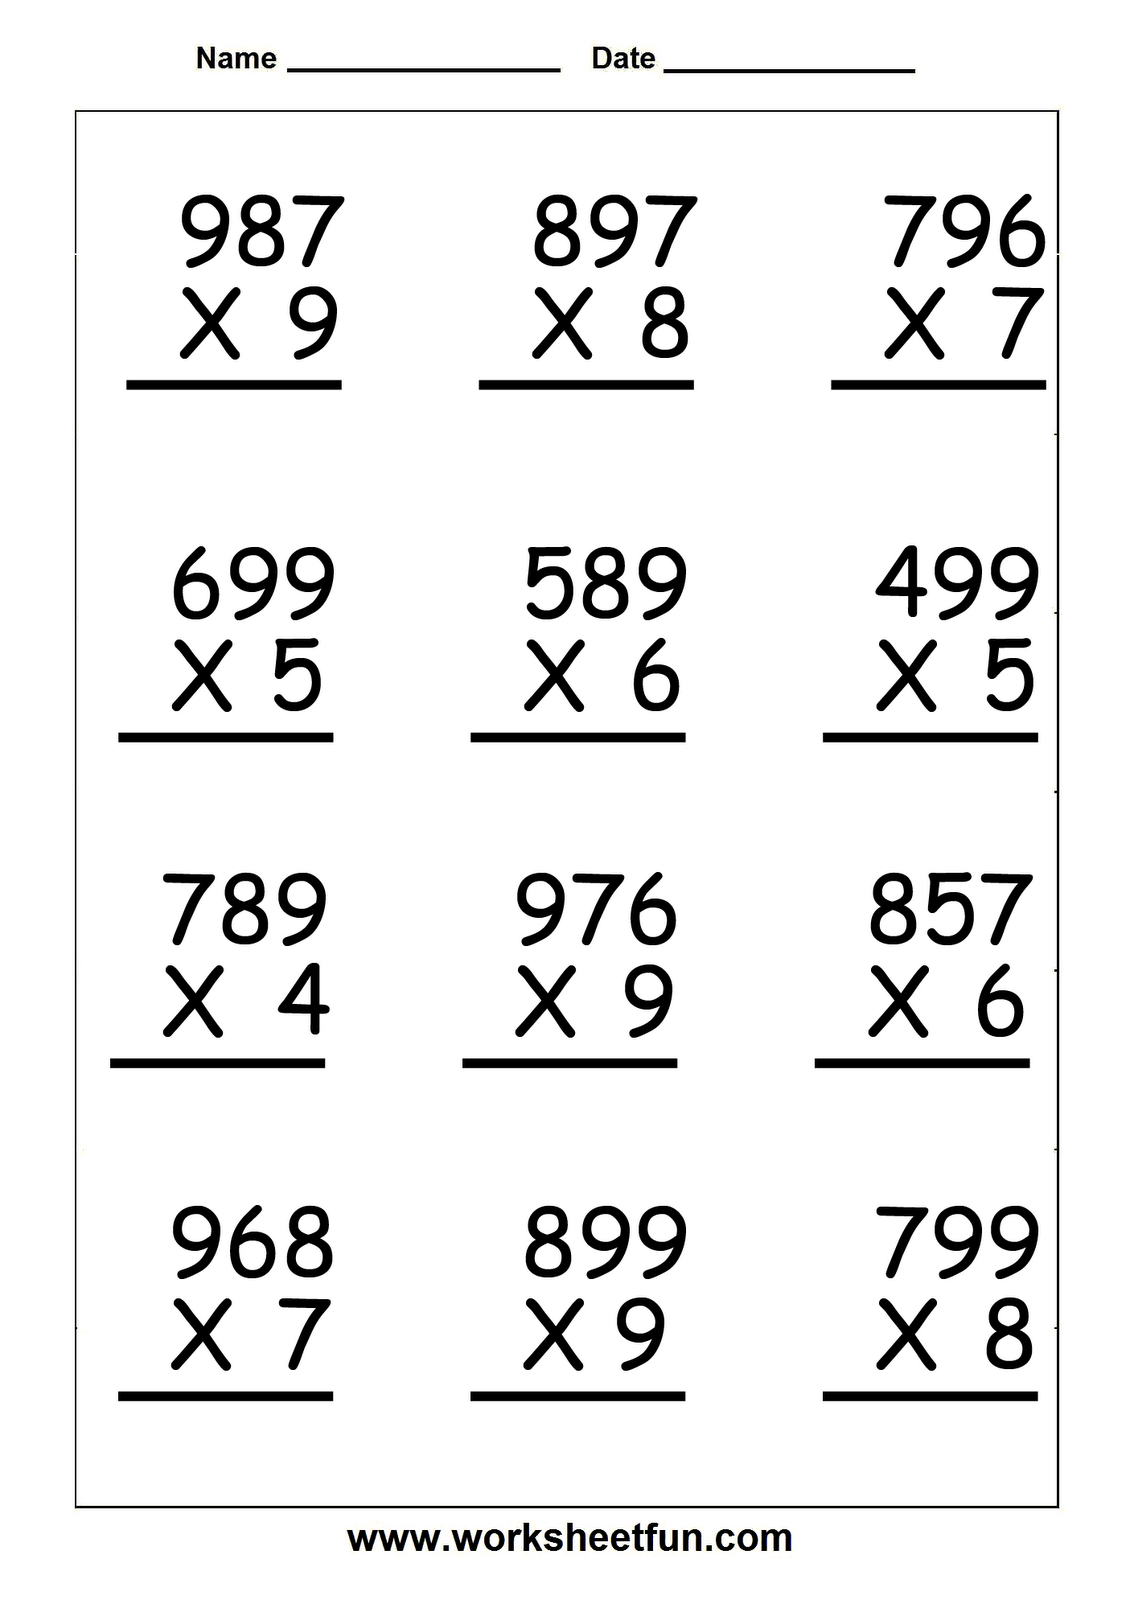 Multiplication Worksheets For 5Th Grade | Worksheetfun - Free - Free Printable Worksheets For 5Th Grade